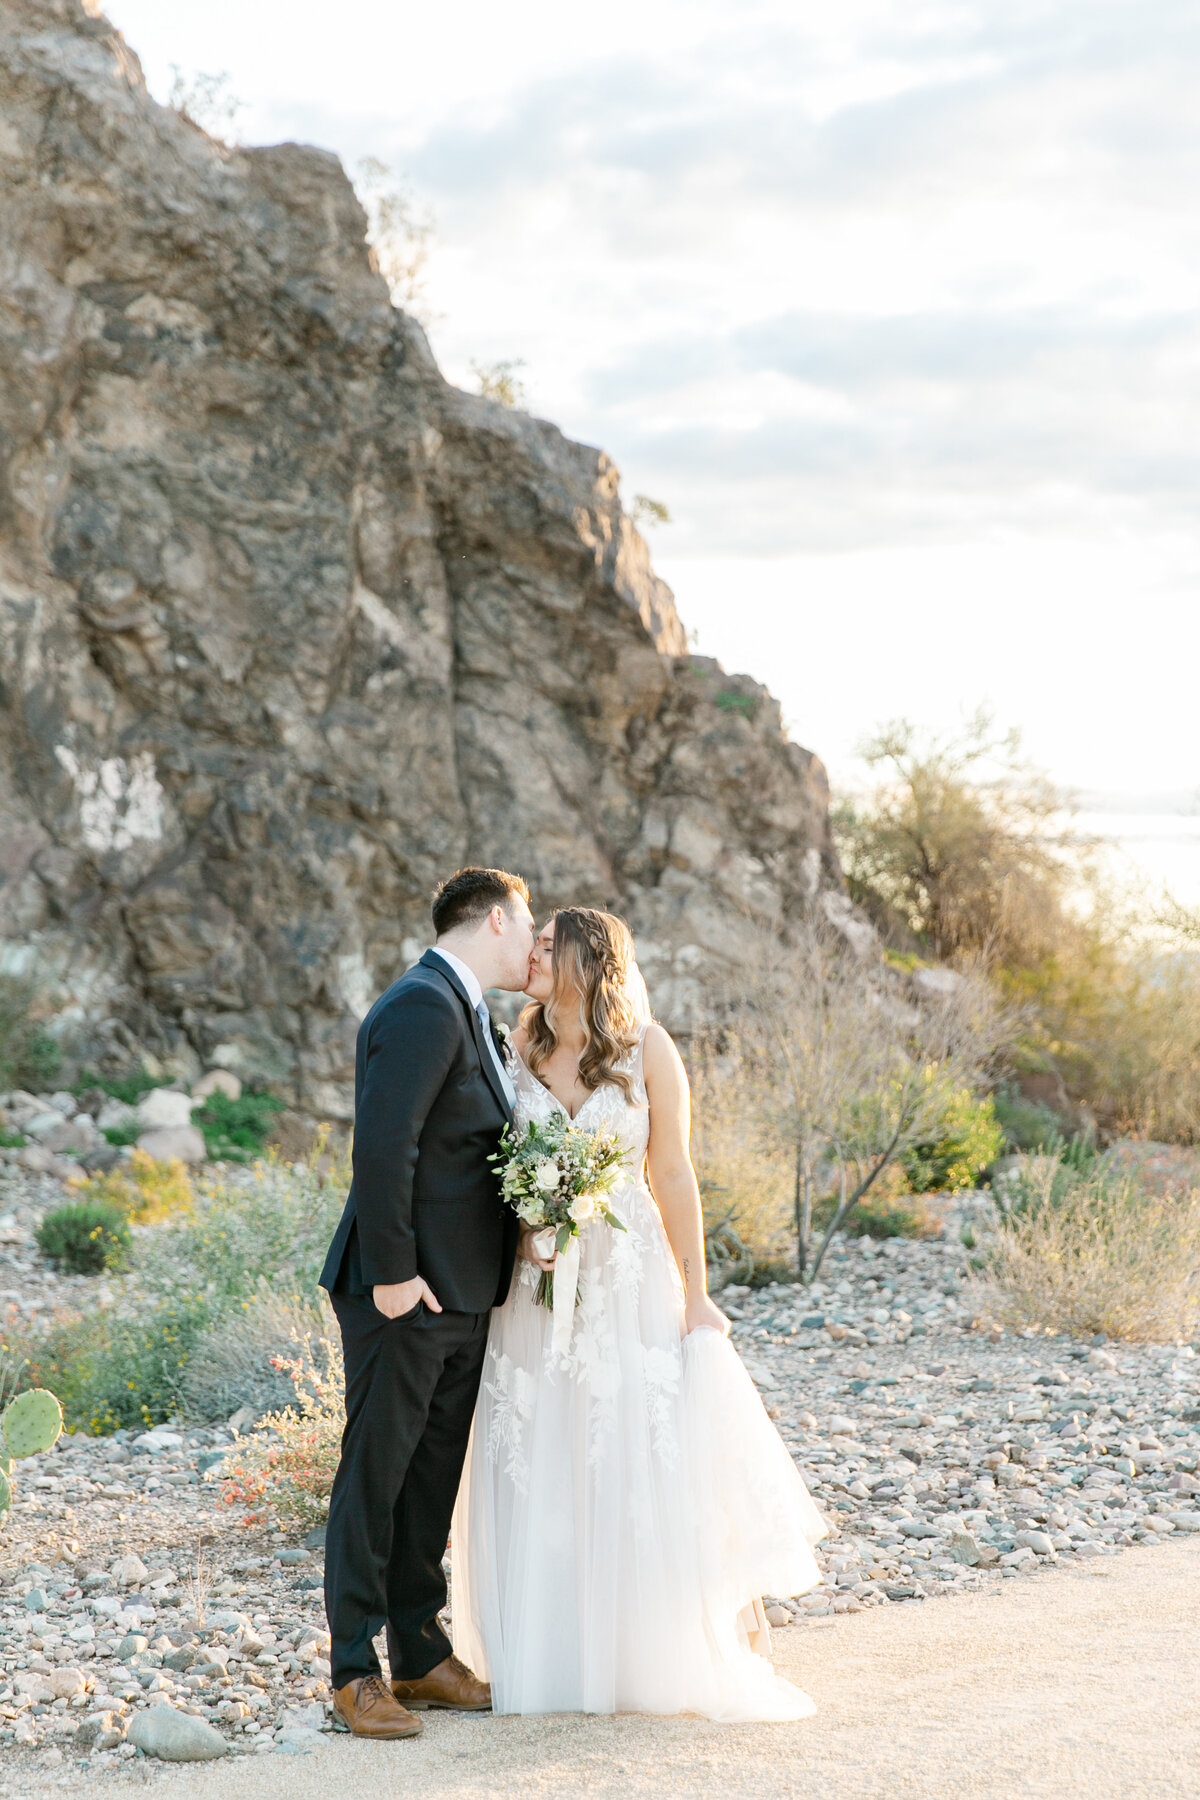 Karlie Colleen Photography - Arizona Backyard wedding - Brittney & Josh-197